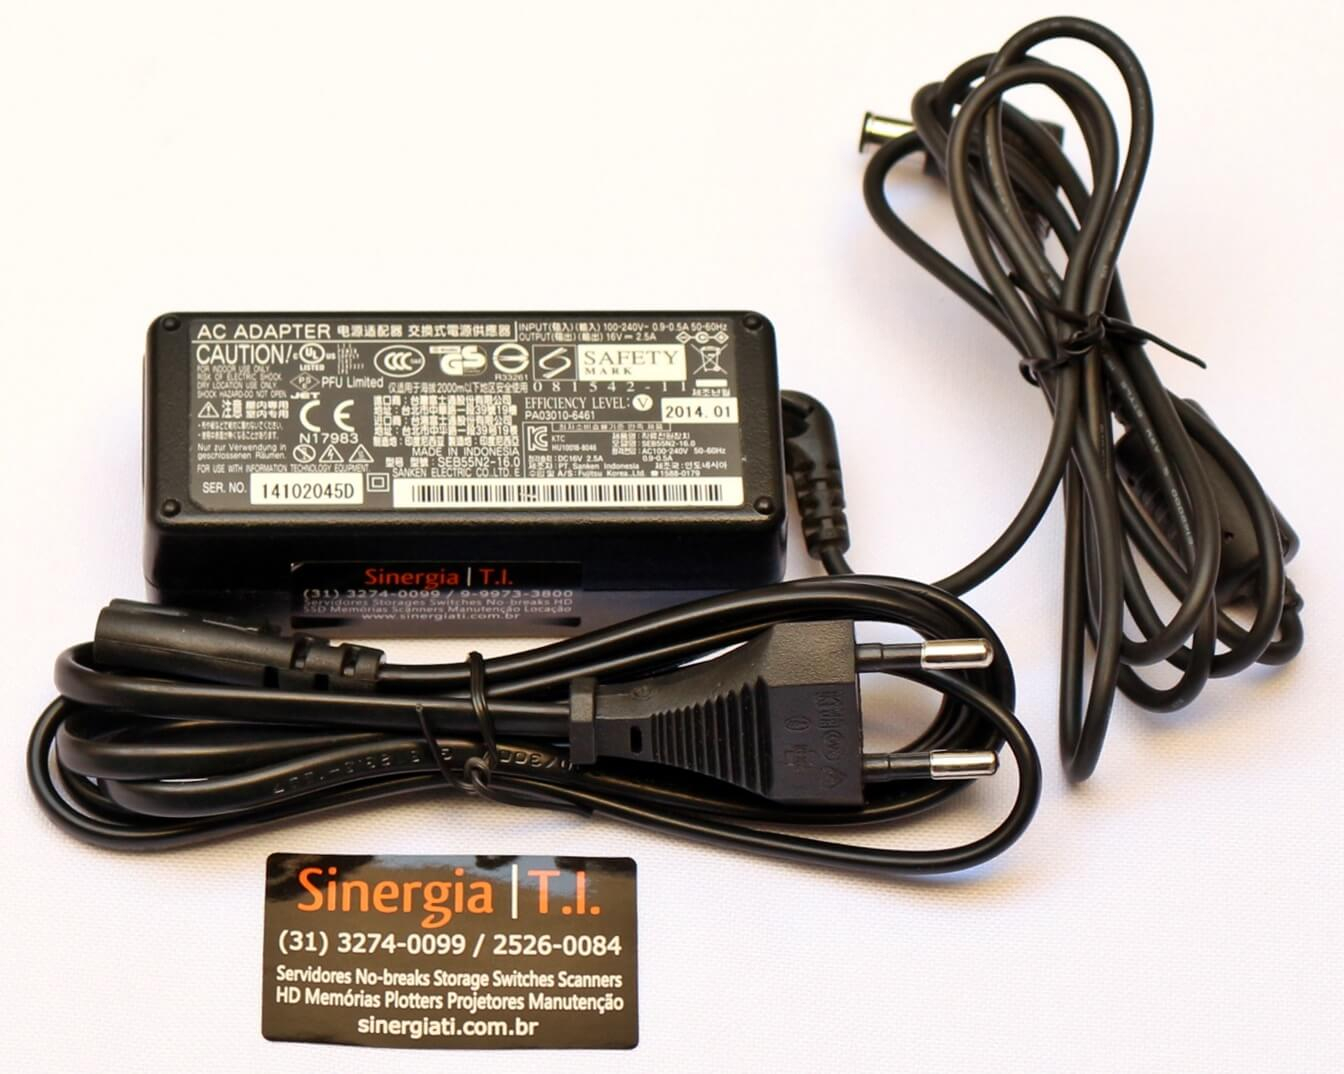 Fonte Original AC Adapter para Scanner Fujitsu modelo iX500 SV600 iX1400 iX1500 iX1600 S500 S510 - PN: PA03656-K949 pronta entrega